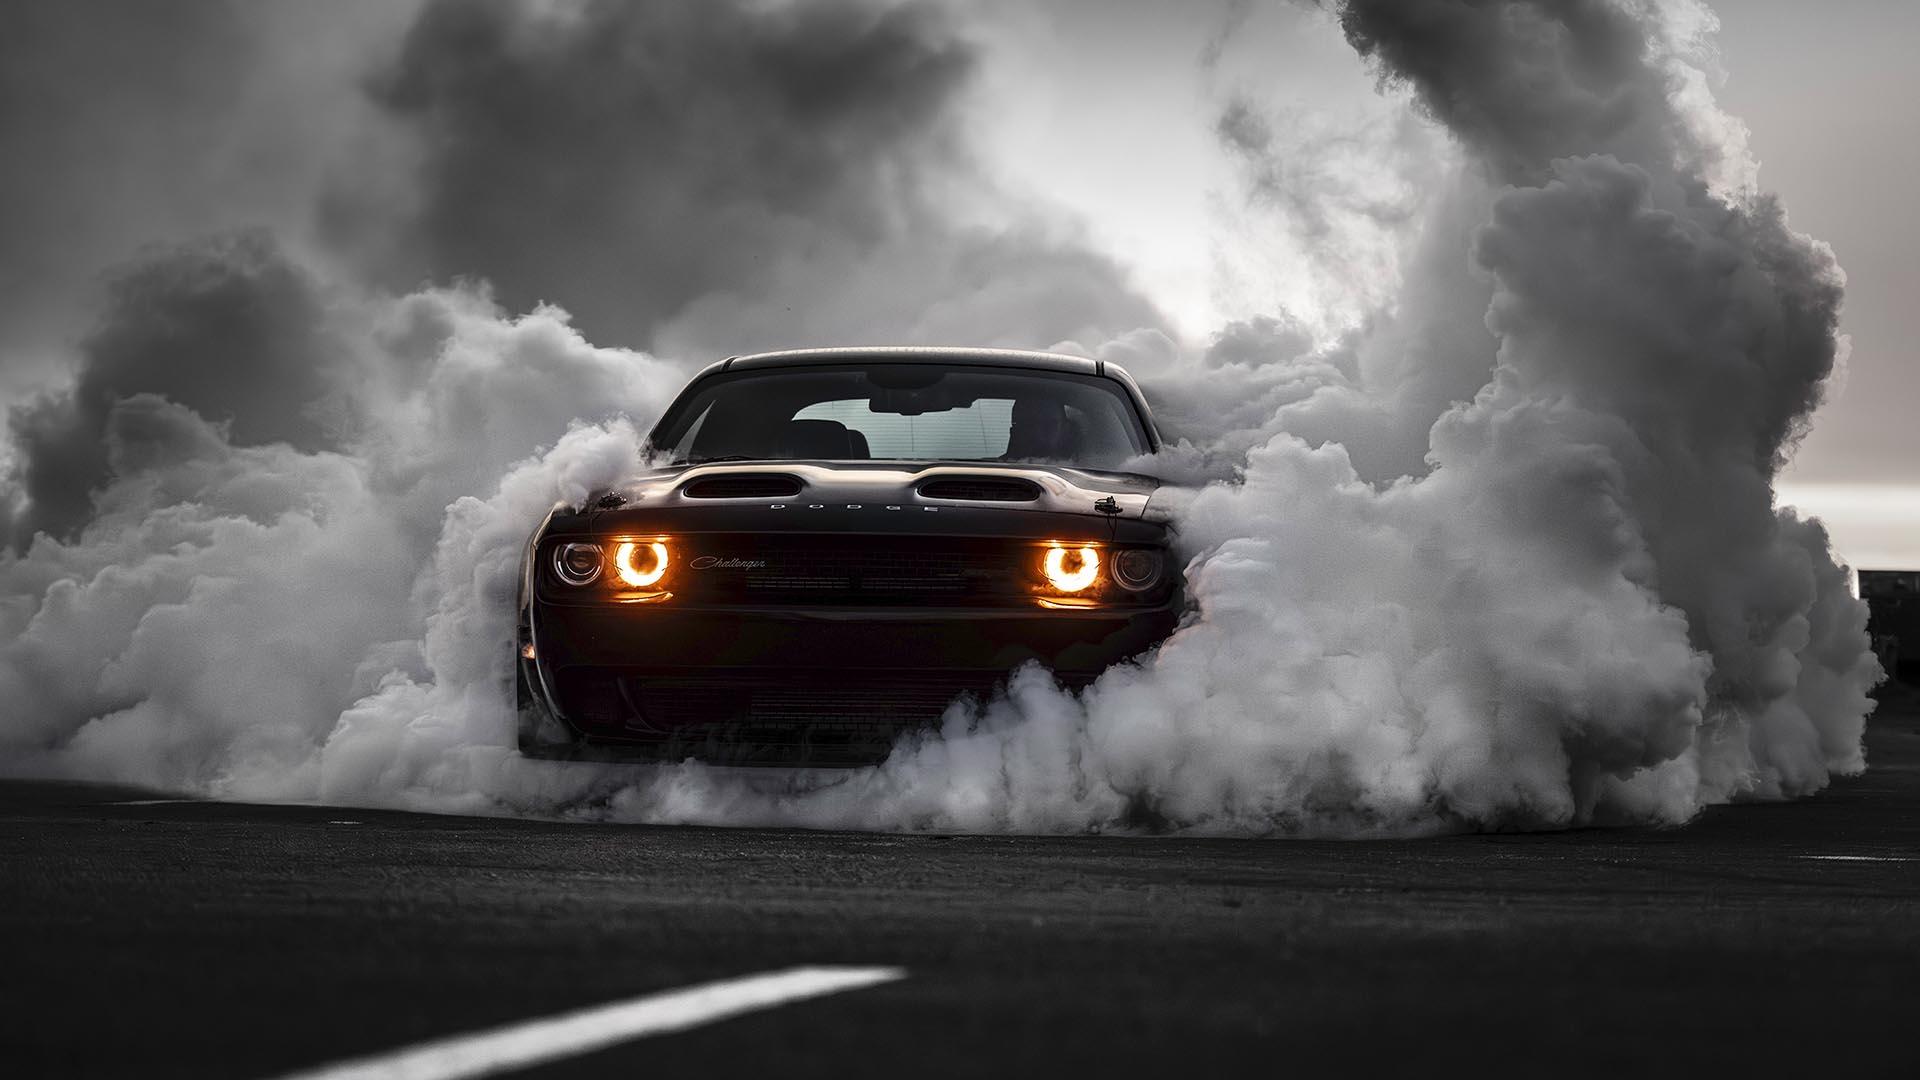 Top Gear Magazine 226 contents: Dodge Challenger Black Ghost burnout